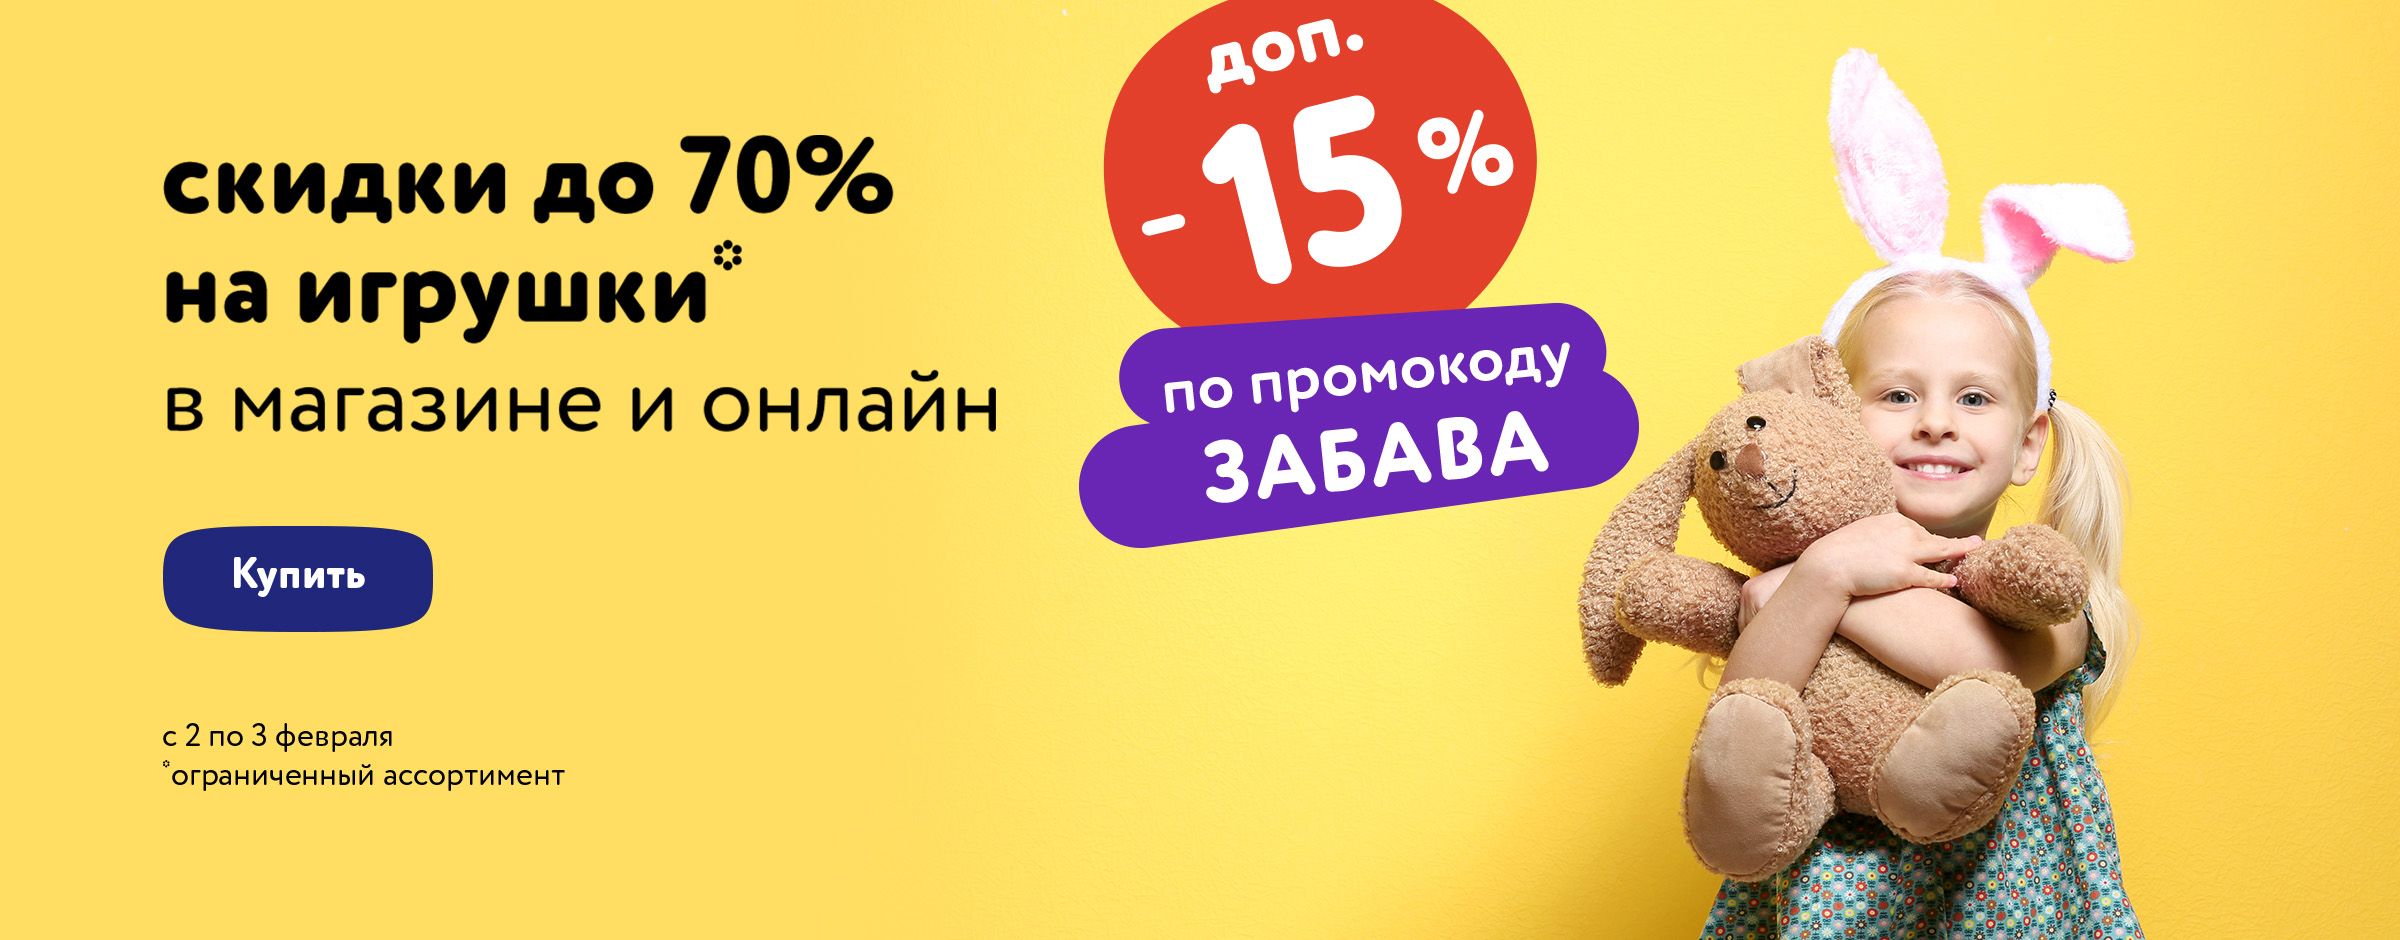 -15% по промокоду на игрушки_ статика + категории